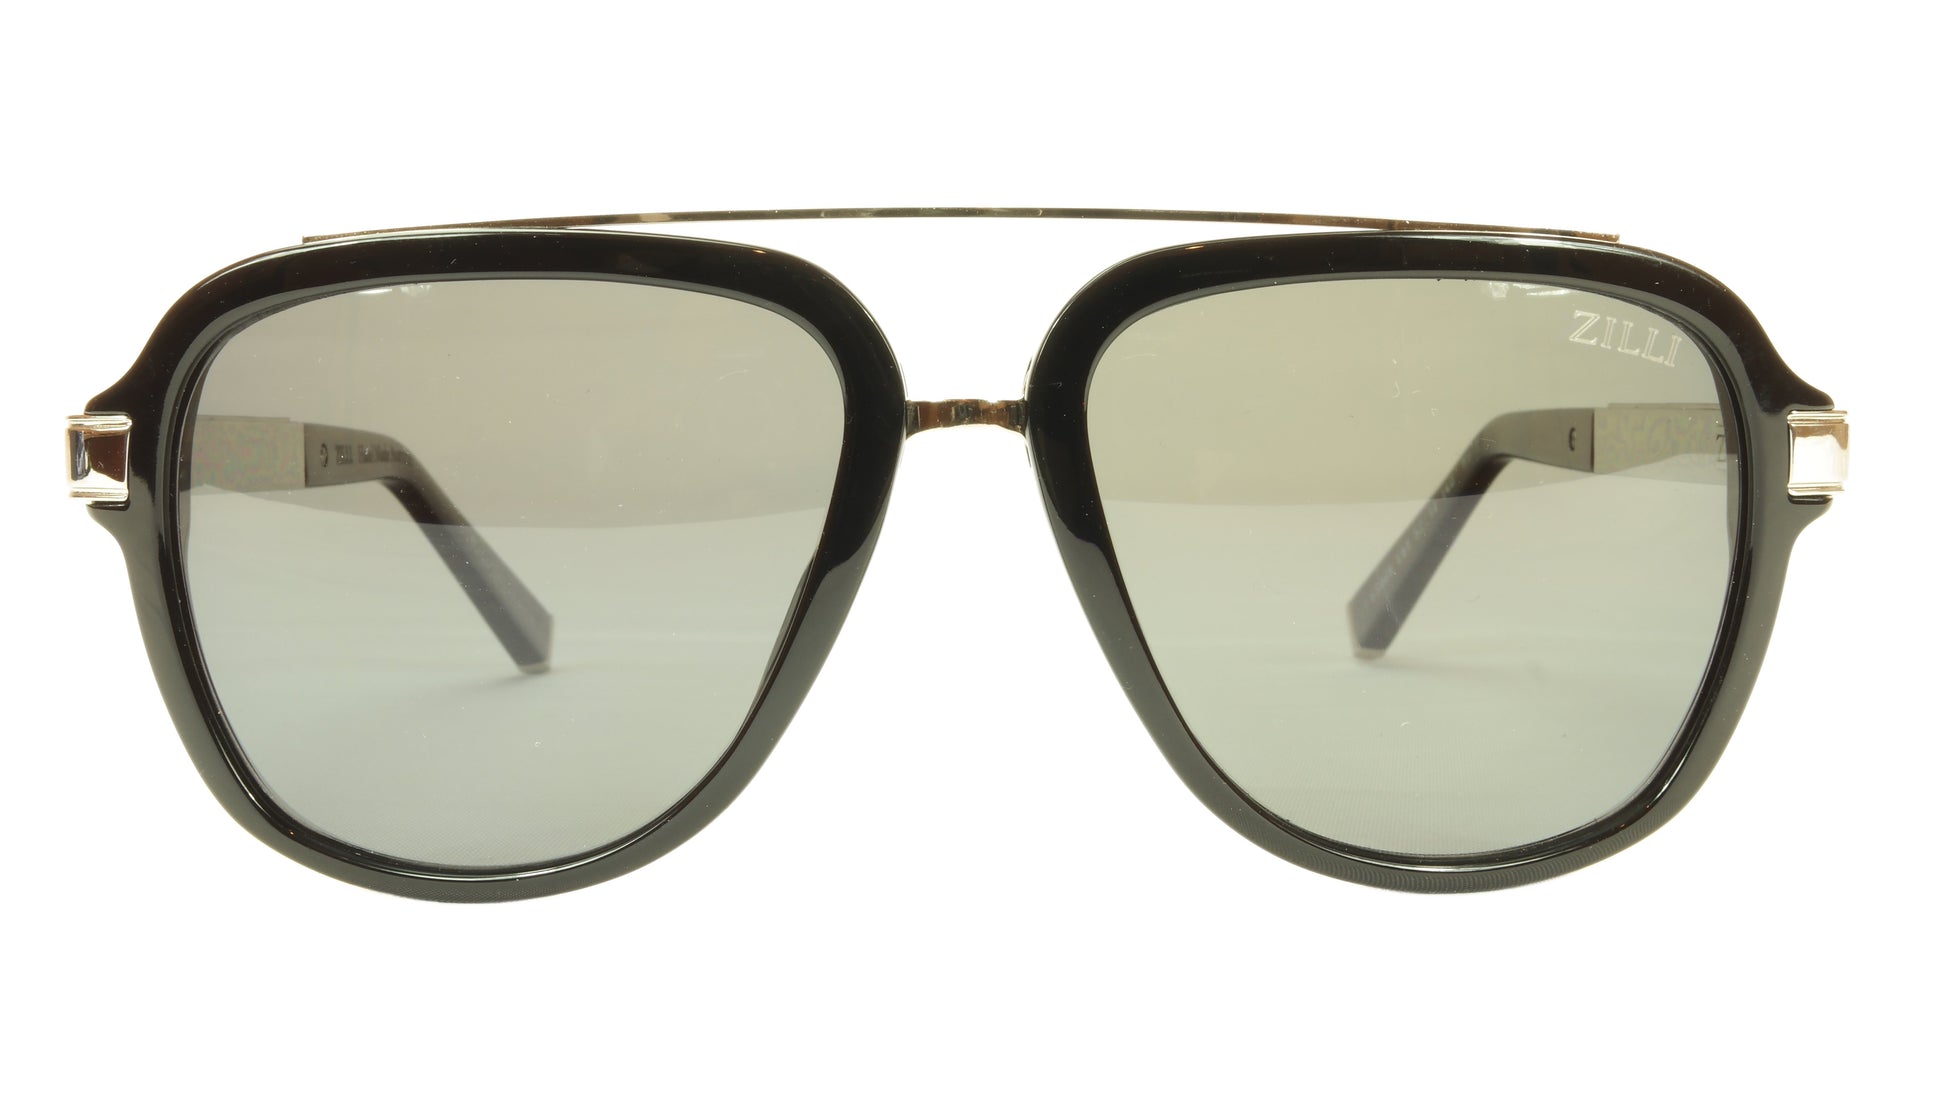 ZILLI Sunglasses Polarized Hand Made Acetate Titanium France ZI 65006 C01 - Frame Bay